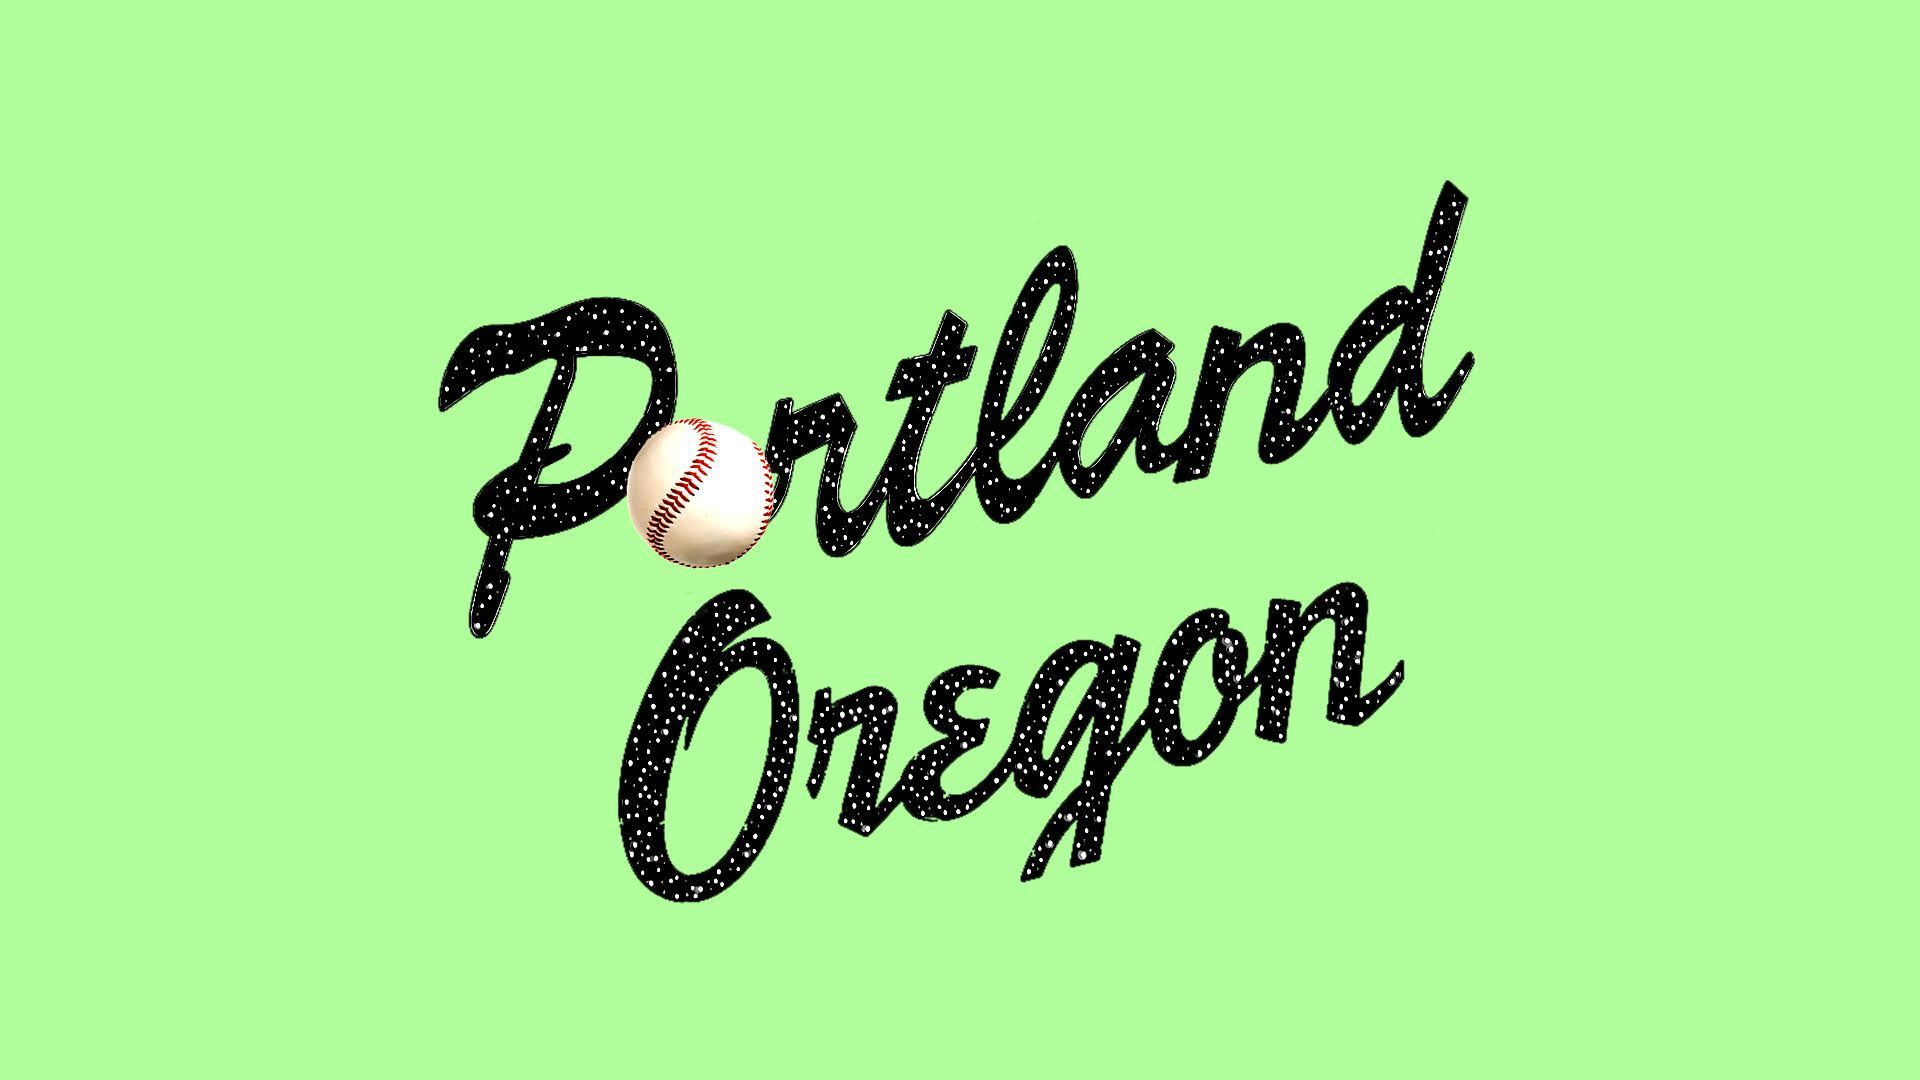 POrtland oregon script with a baseball as the O in Portland